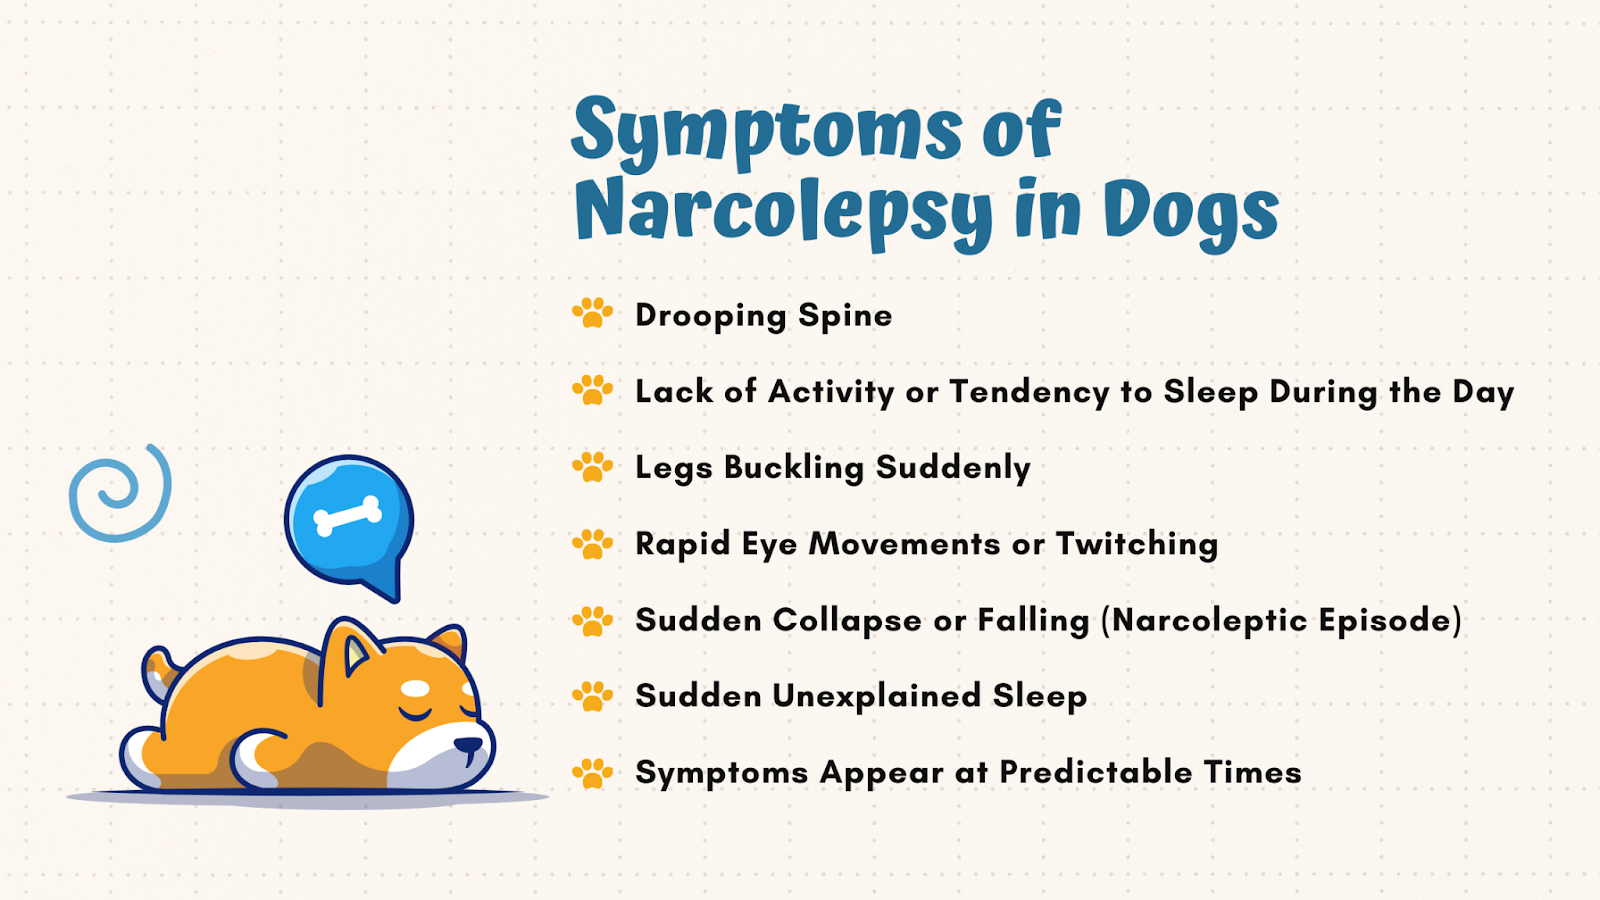 Symptoms of narcolepsy in dogs